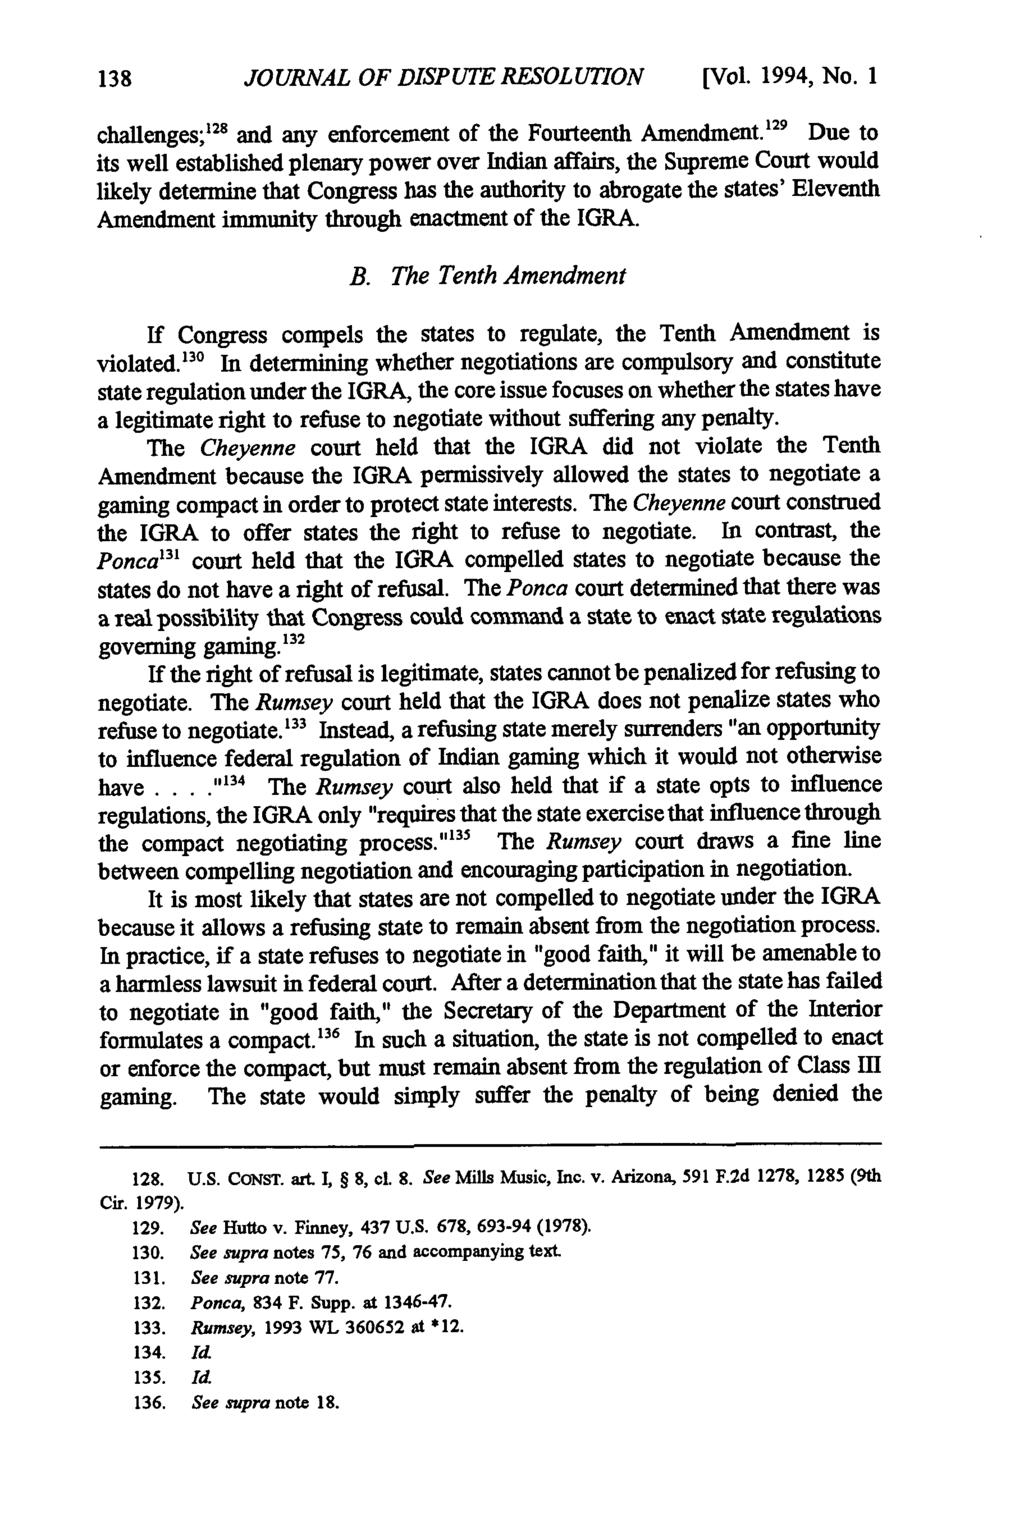 Journal of Dispute Resolution, Vol. 1994, Iss. 1 [1994], Art. 12 JOURNAL OF DISPUTE RESOLUTION [Vol. 1994, No. I challenges; 28 and any enforcement of the Fourteenth Amendment.